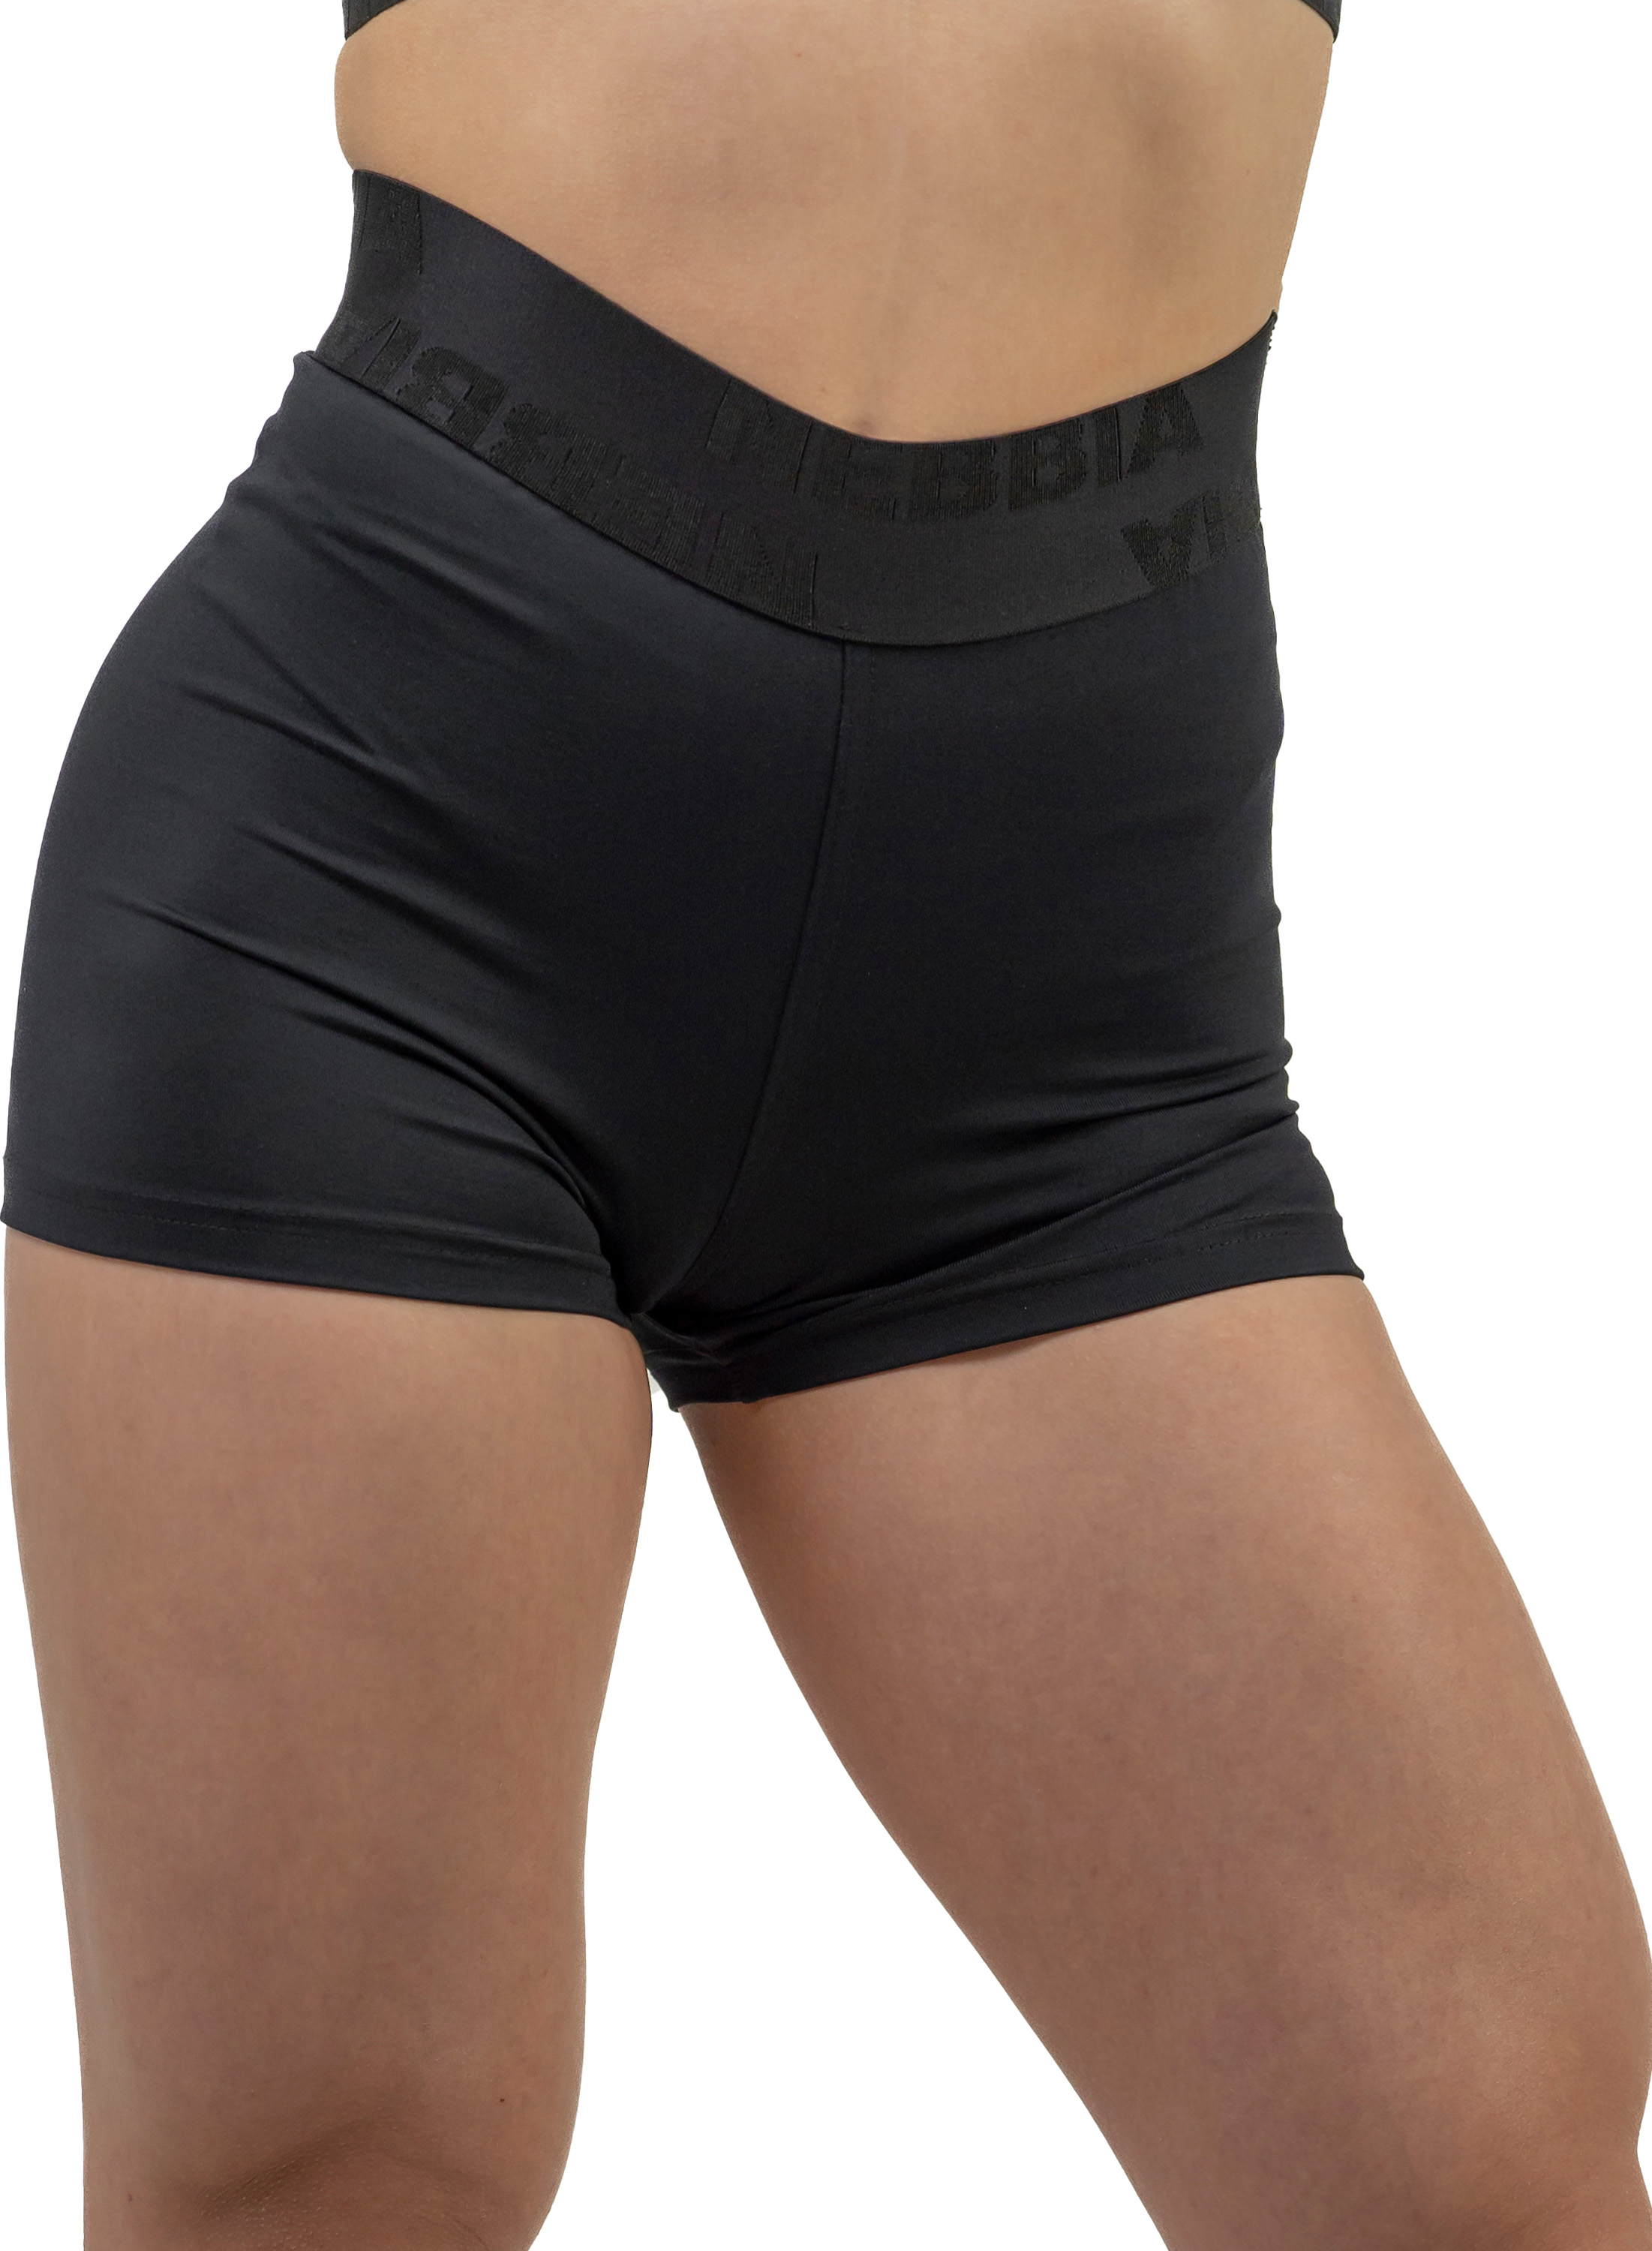 Women's fitness compression high waist shorts Nebbia Intense Leg Day